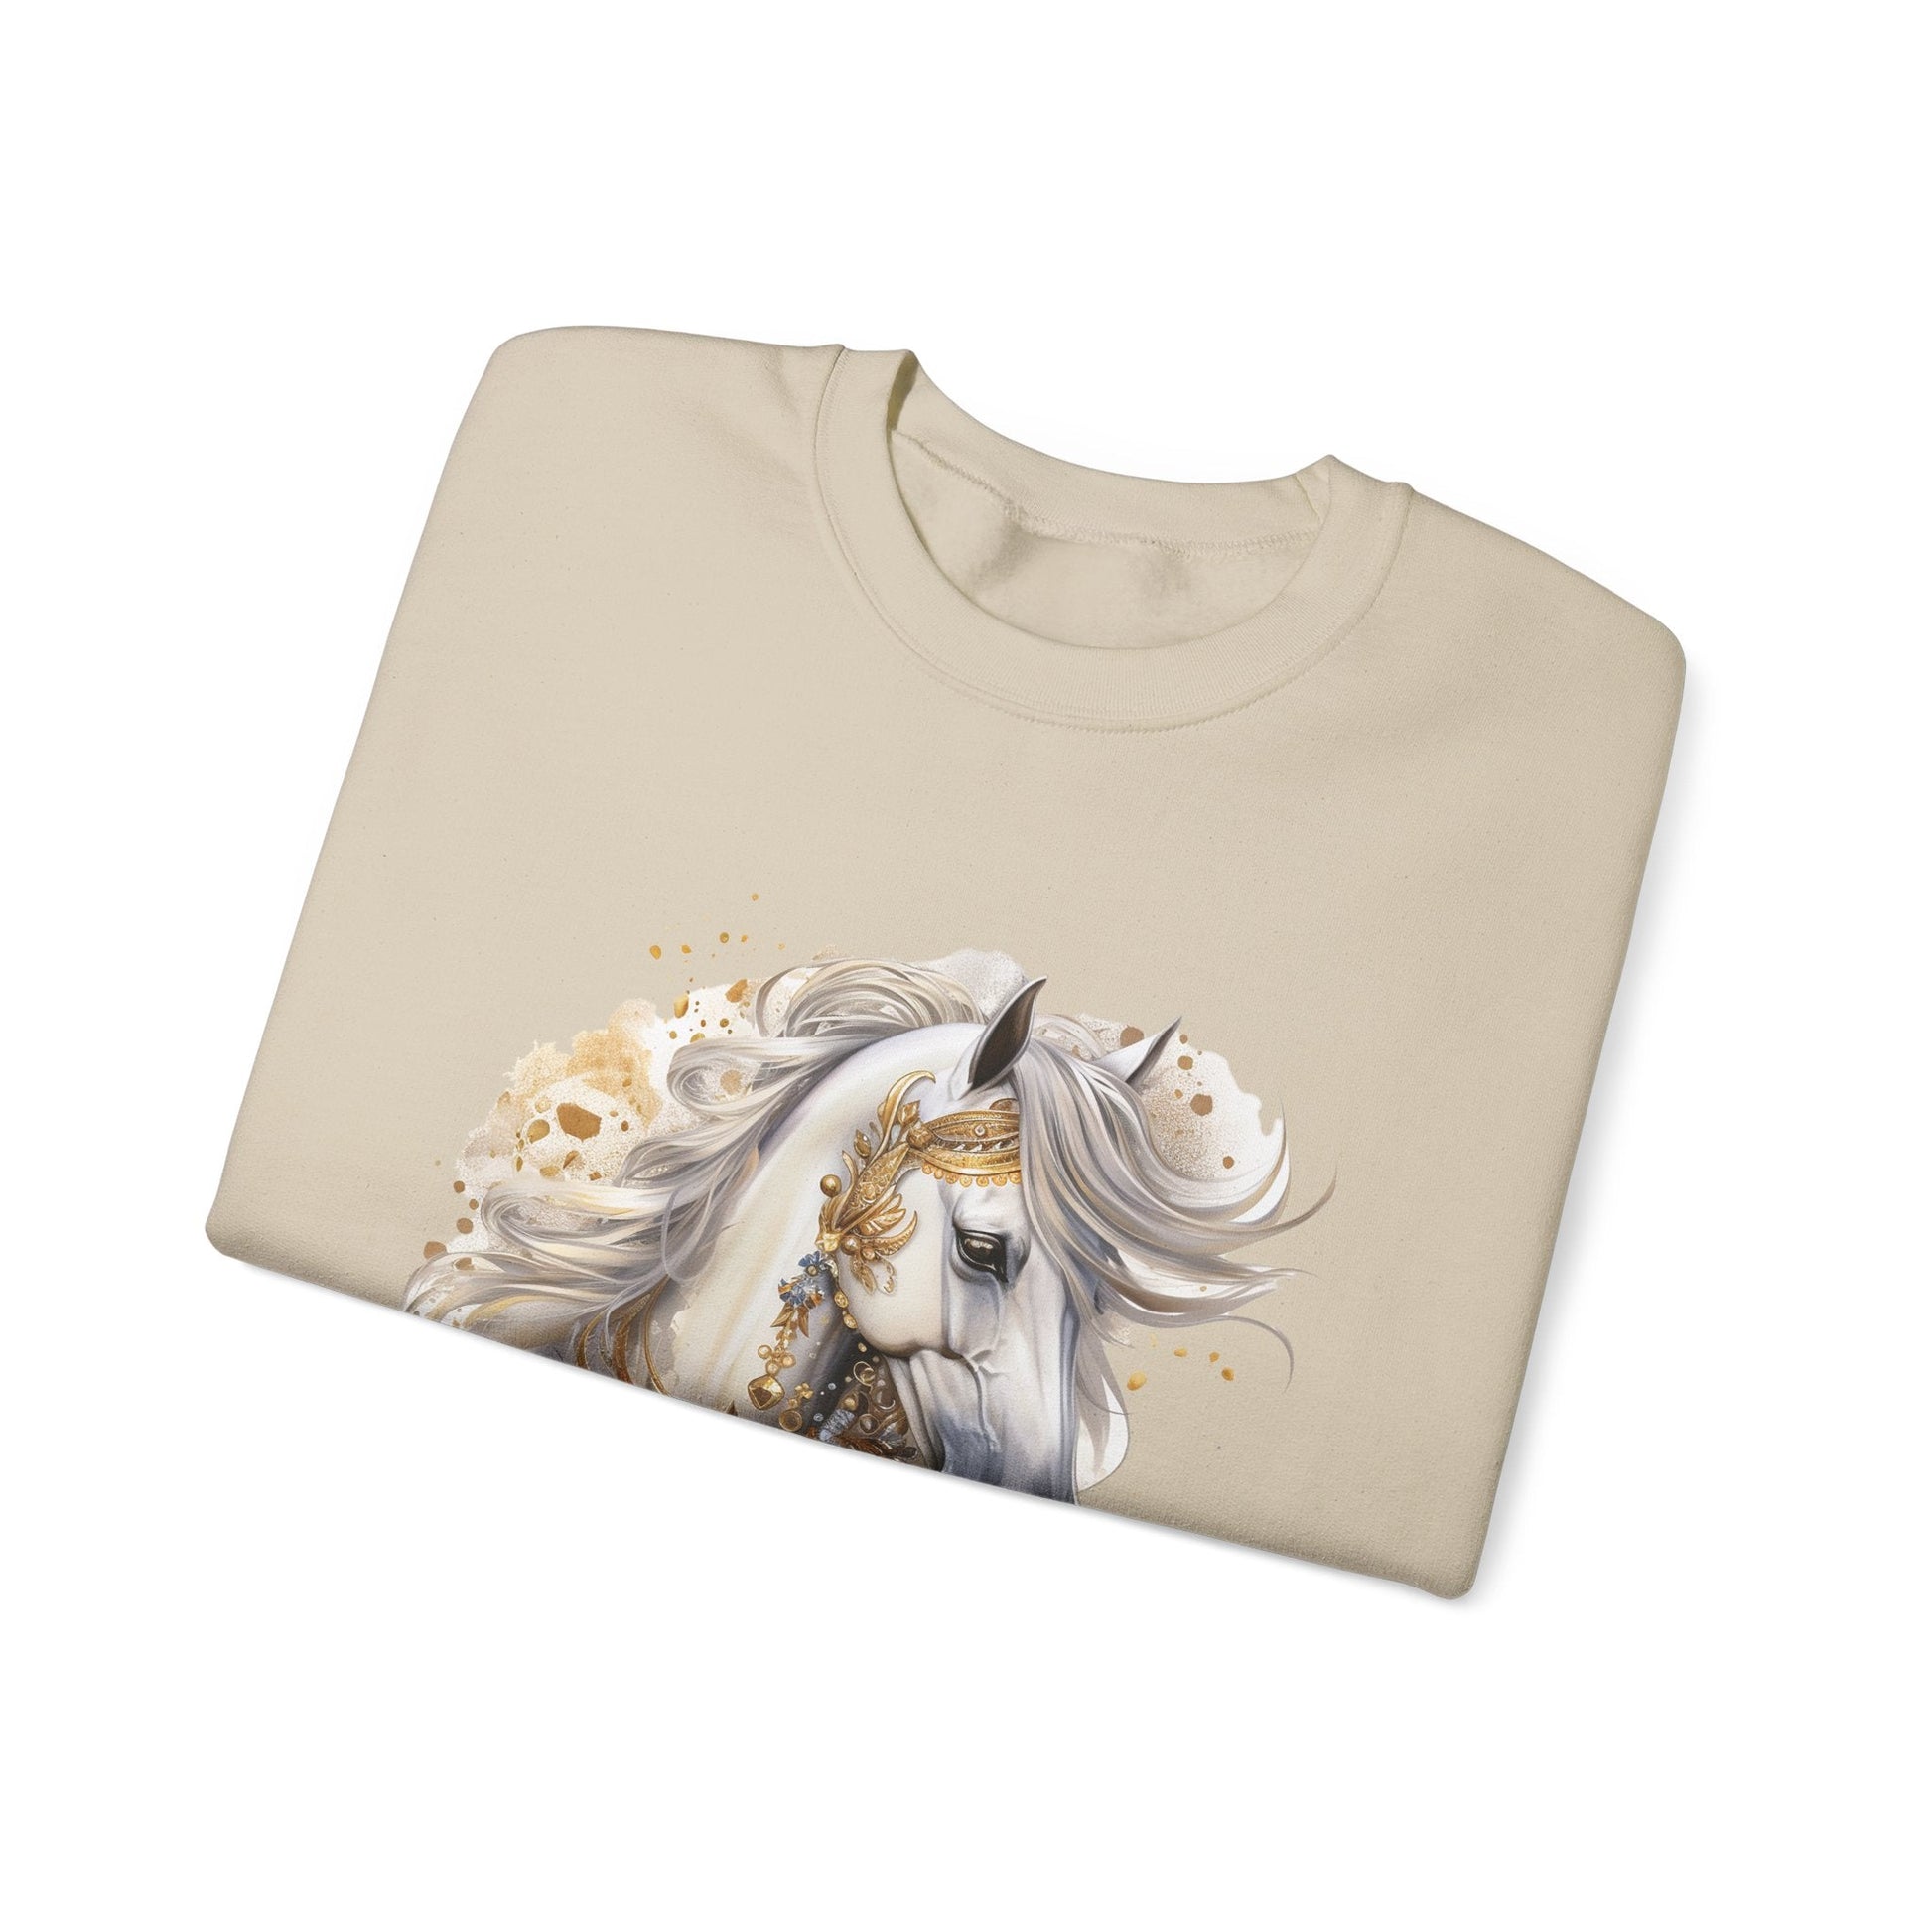 New Years Shirt 2024 Sweatshirt, White Horse, Happy New Year Written on the Sleeve, Horse Design #3 - FlooredByArt